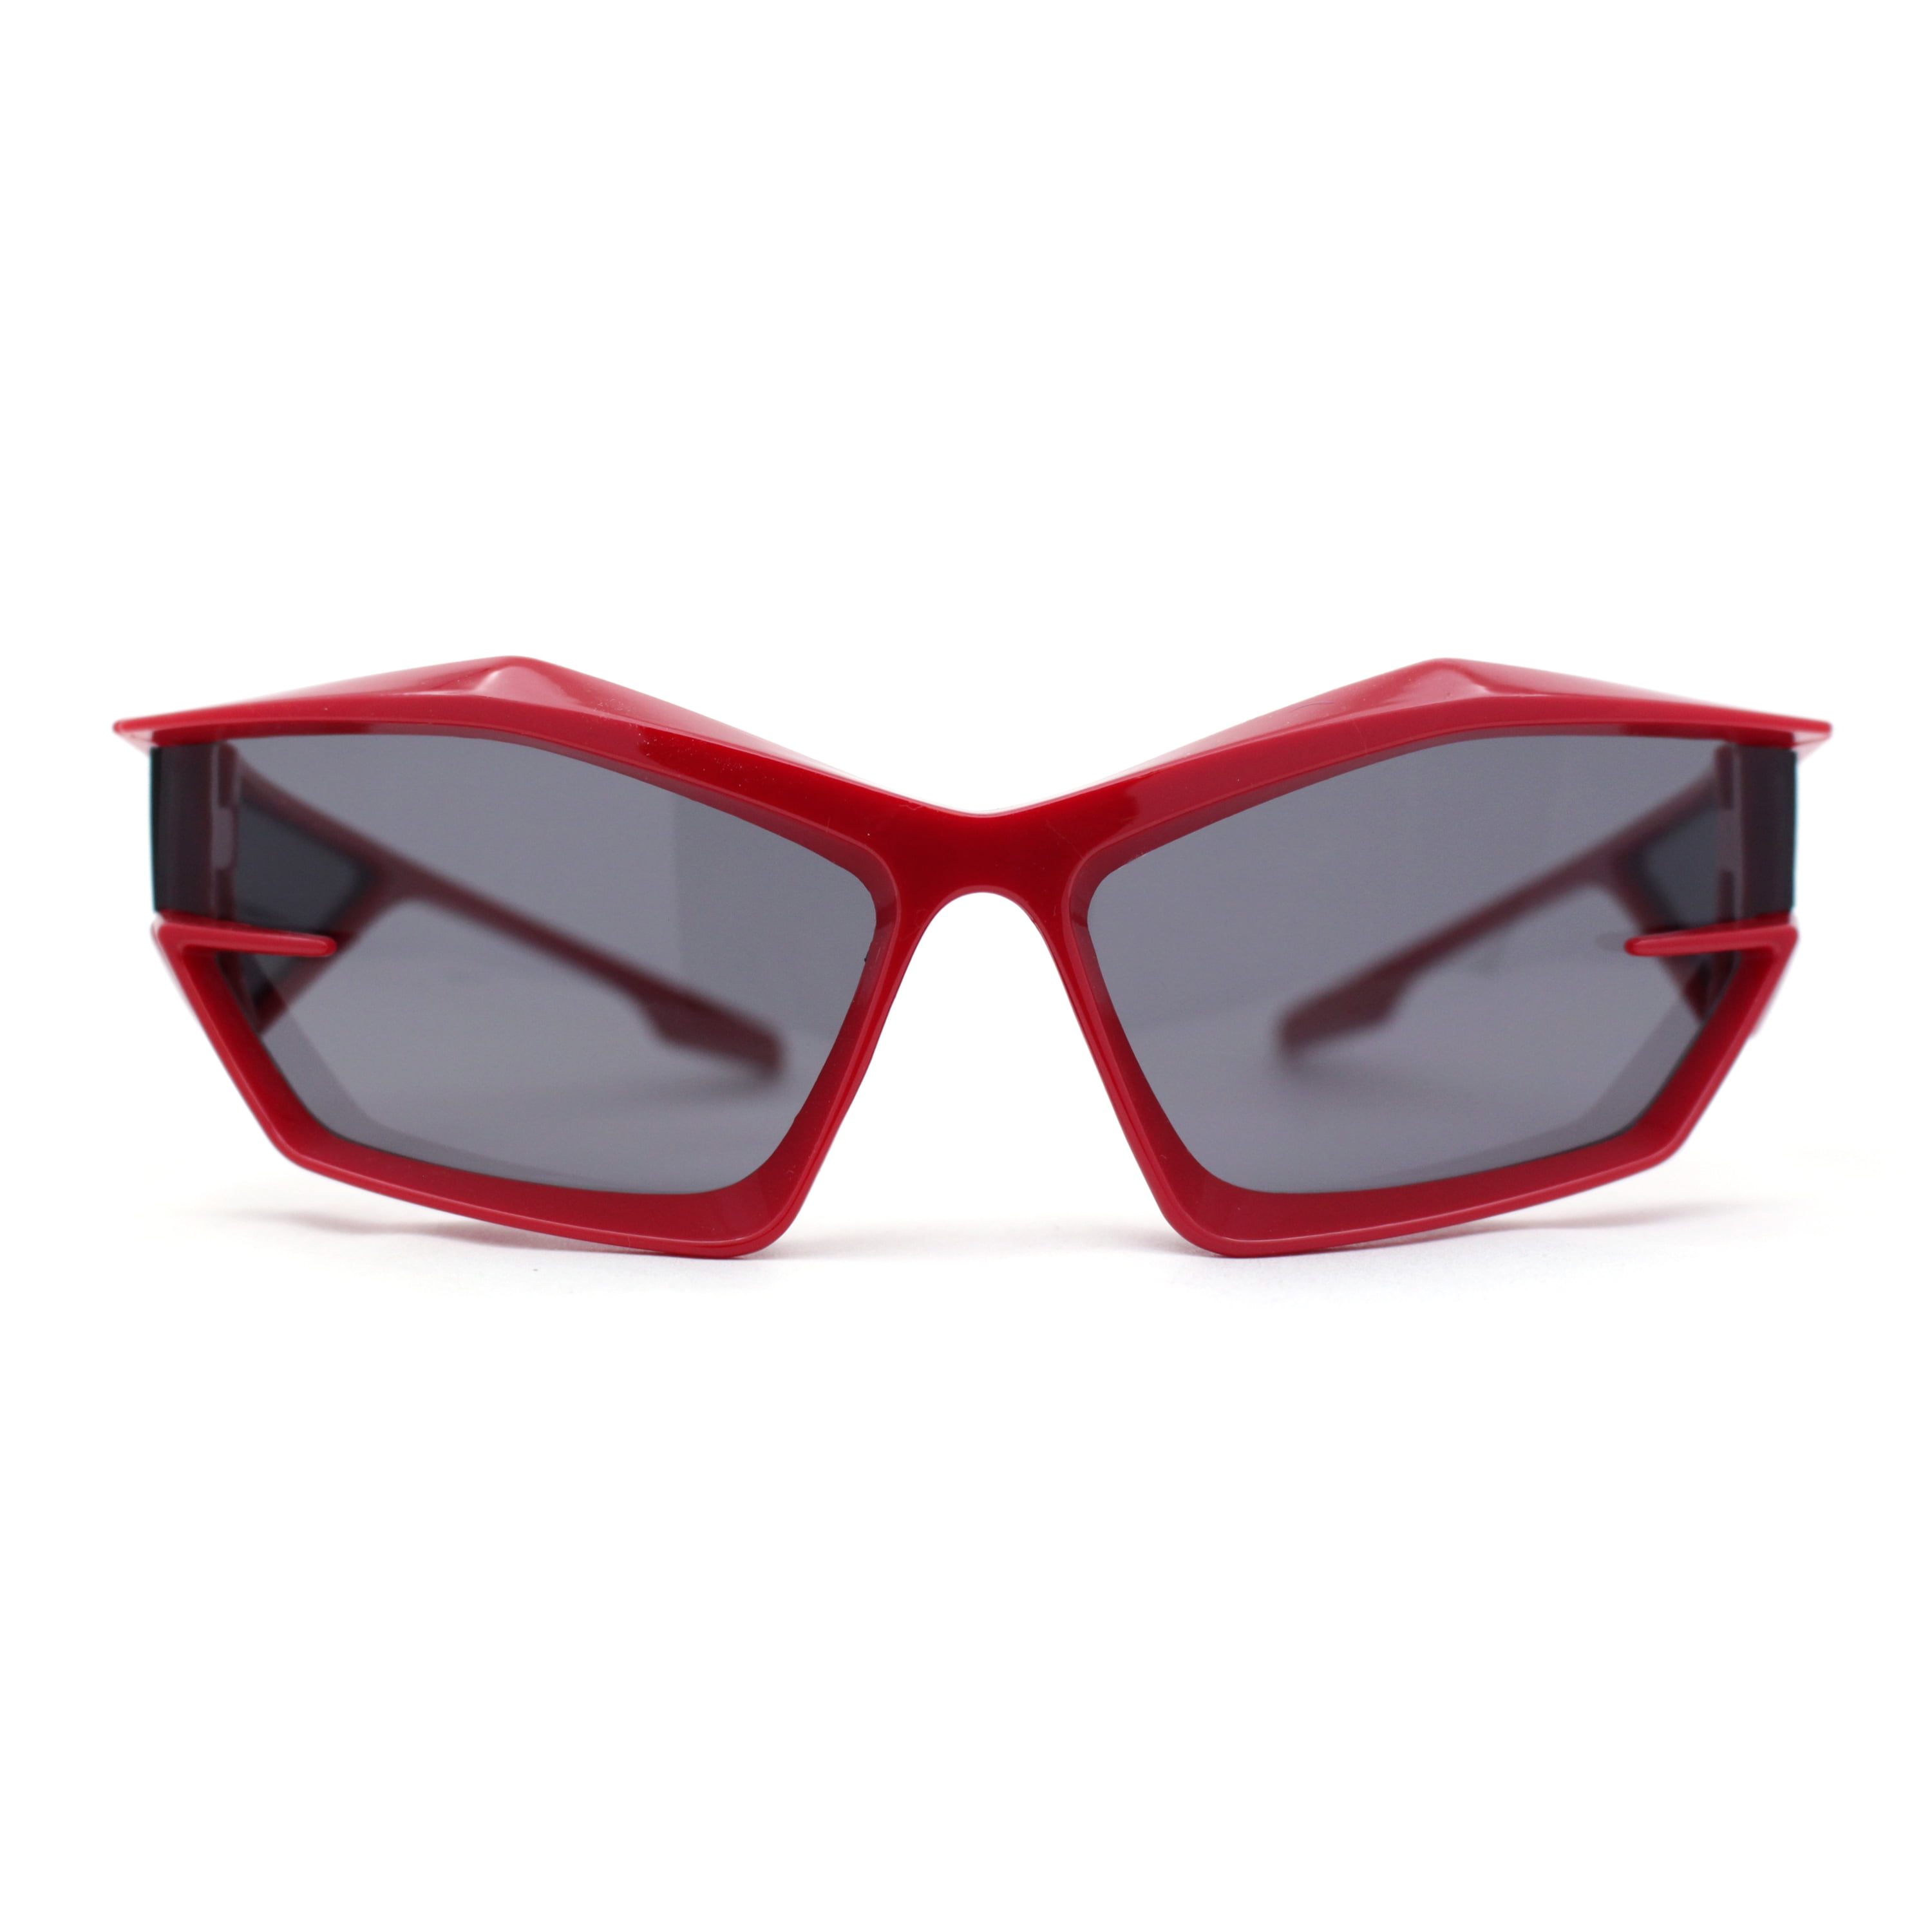 Unique Trendy 90s Sport Plastic Side Visor Wrap Around Sunglasses Red -  Black